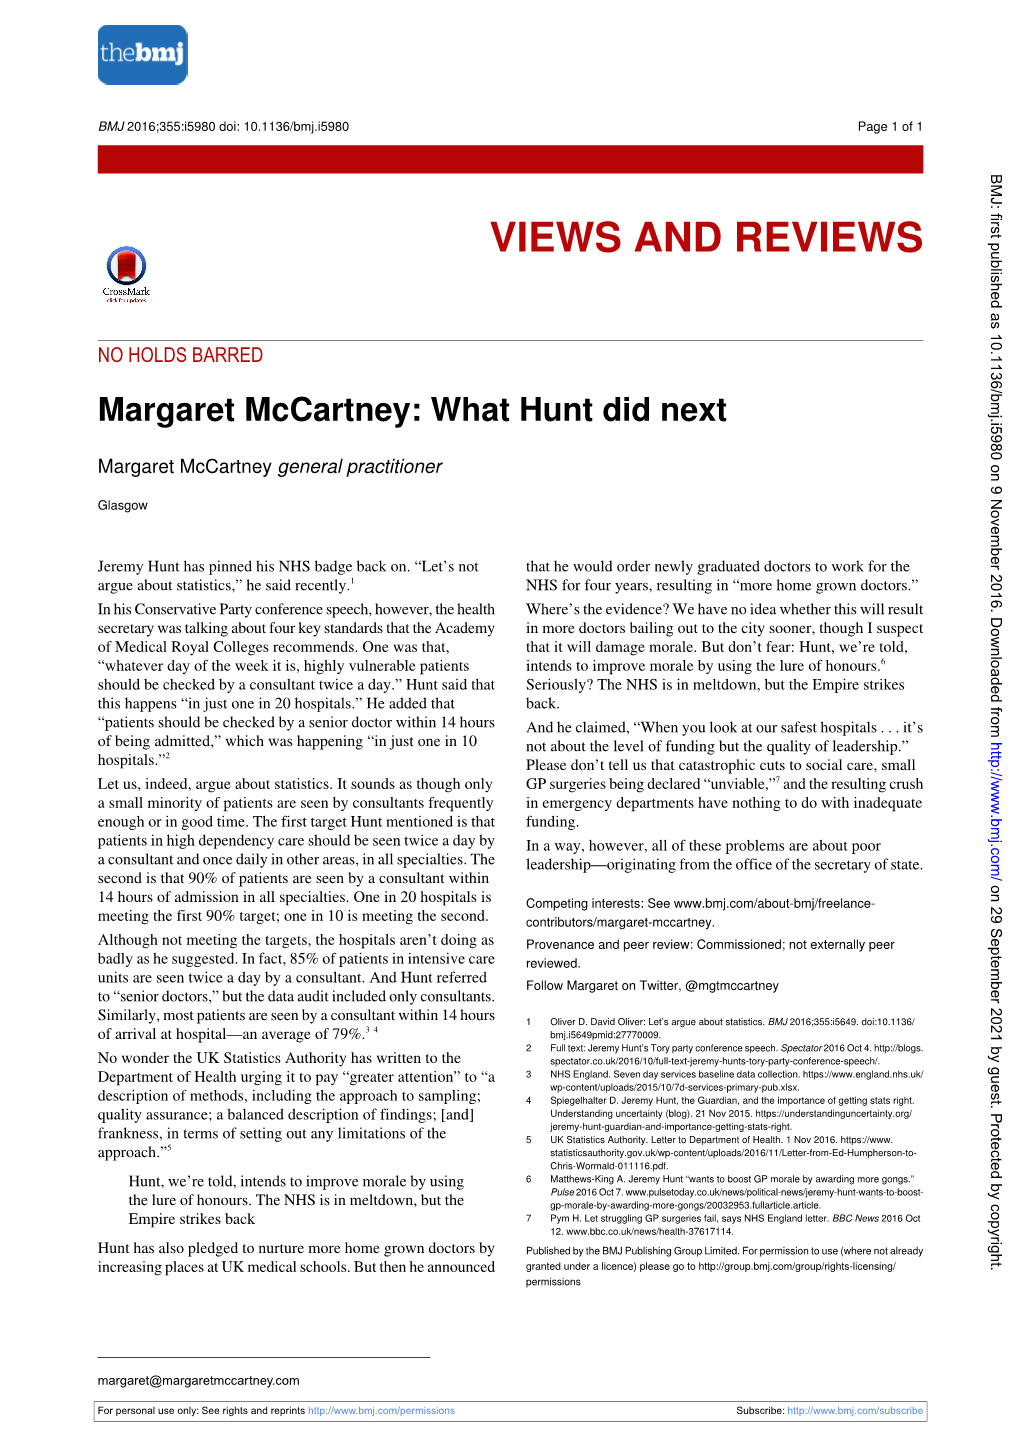 Margaret Mccartney: What Hunt Did Next